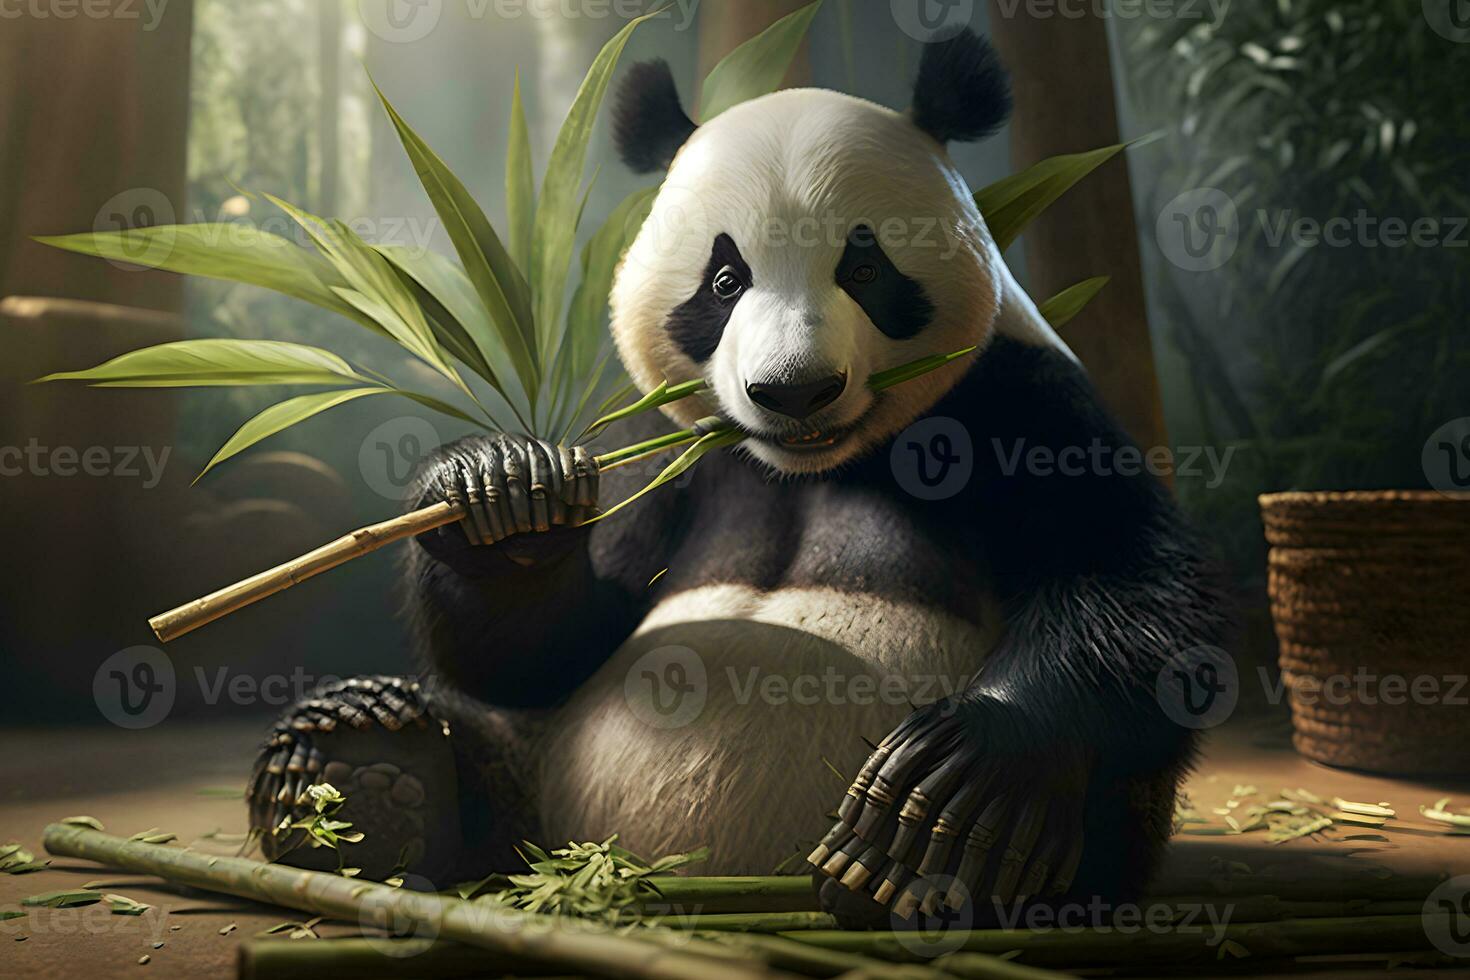 Panda eating shoots of bamboo. Rare and endangered black and white bear. Neural network AI generated photo